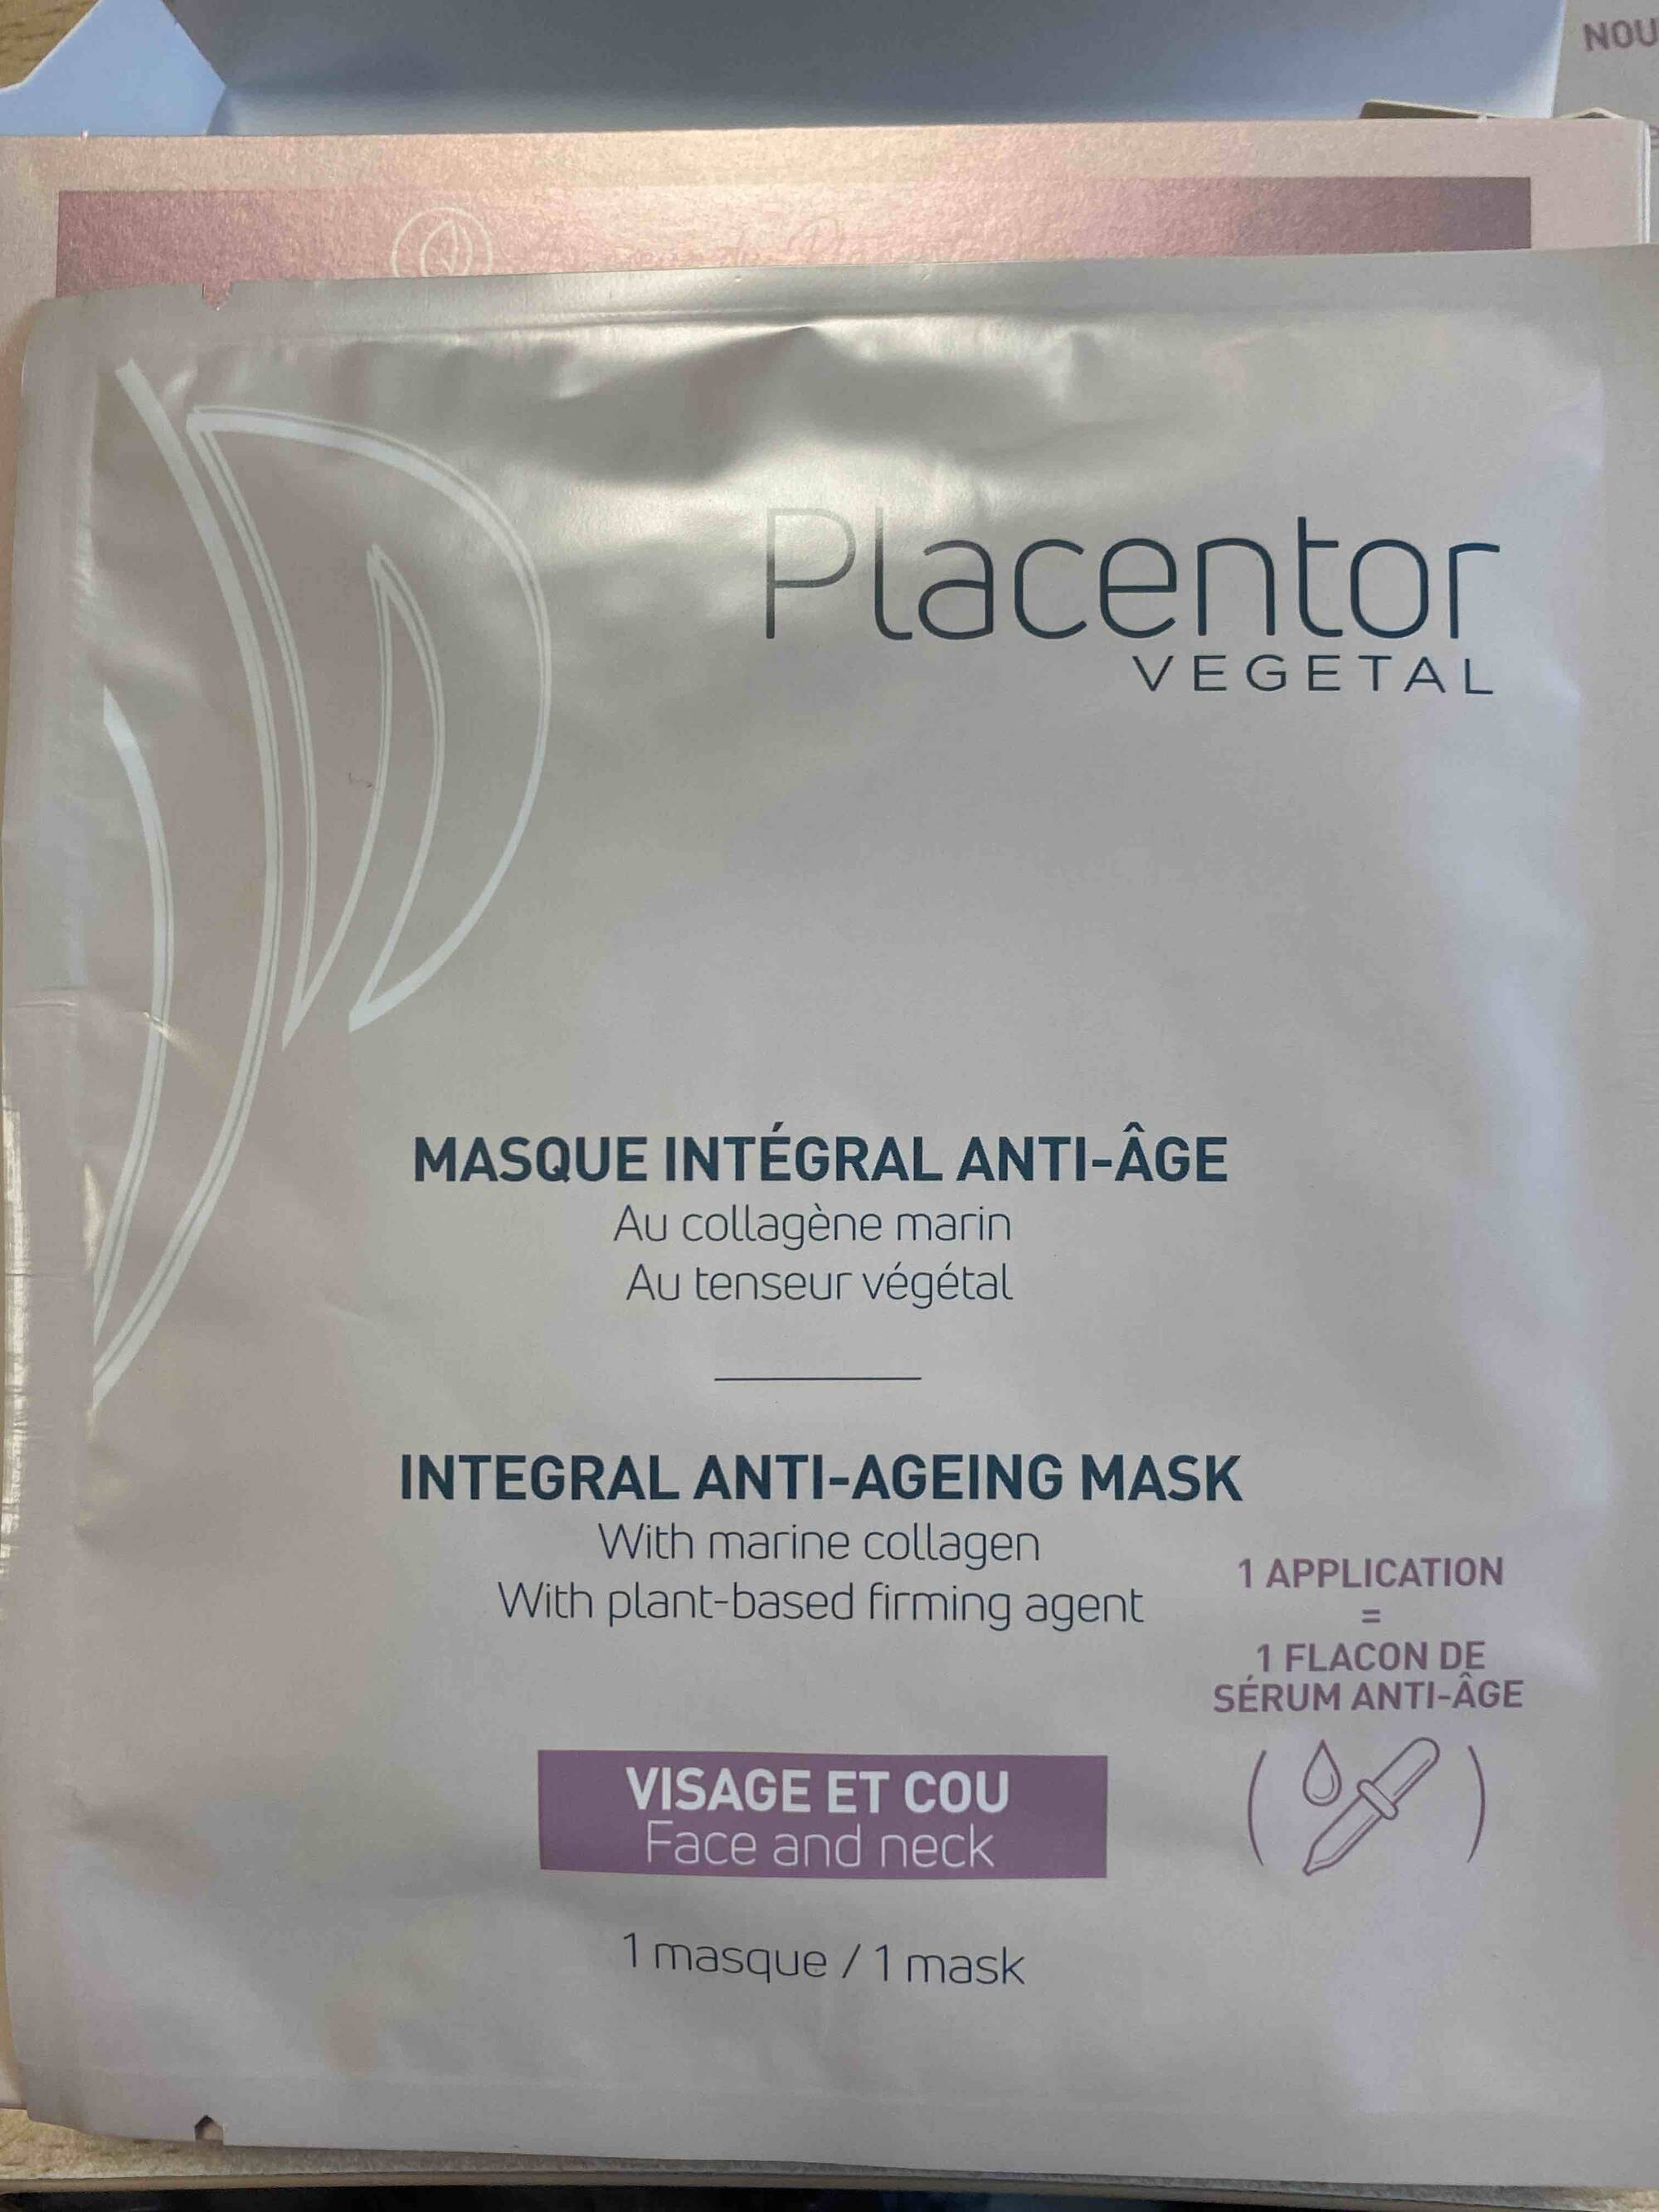 SICOBEL - Placentor végétal - Masque intégral anti-âge